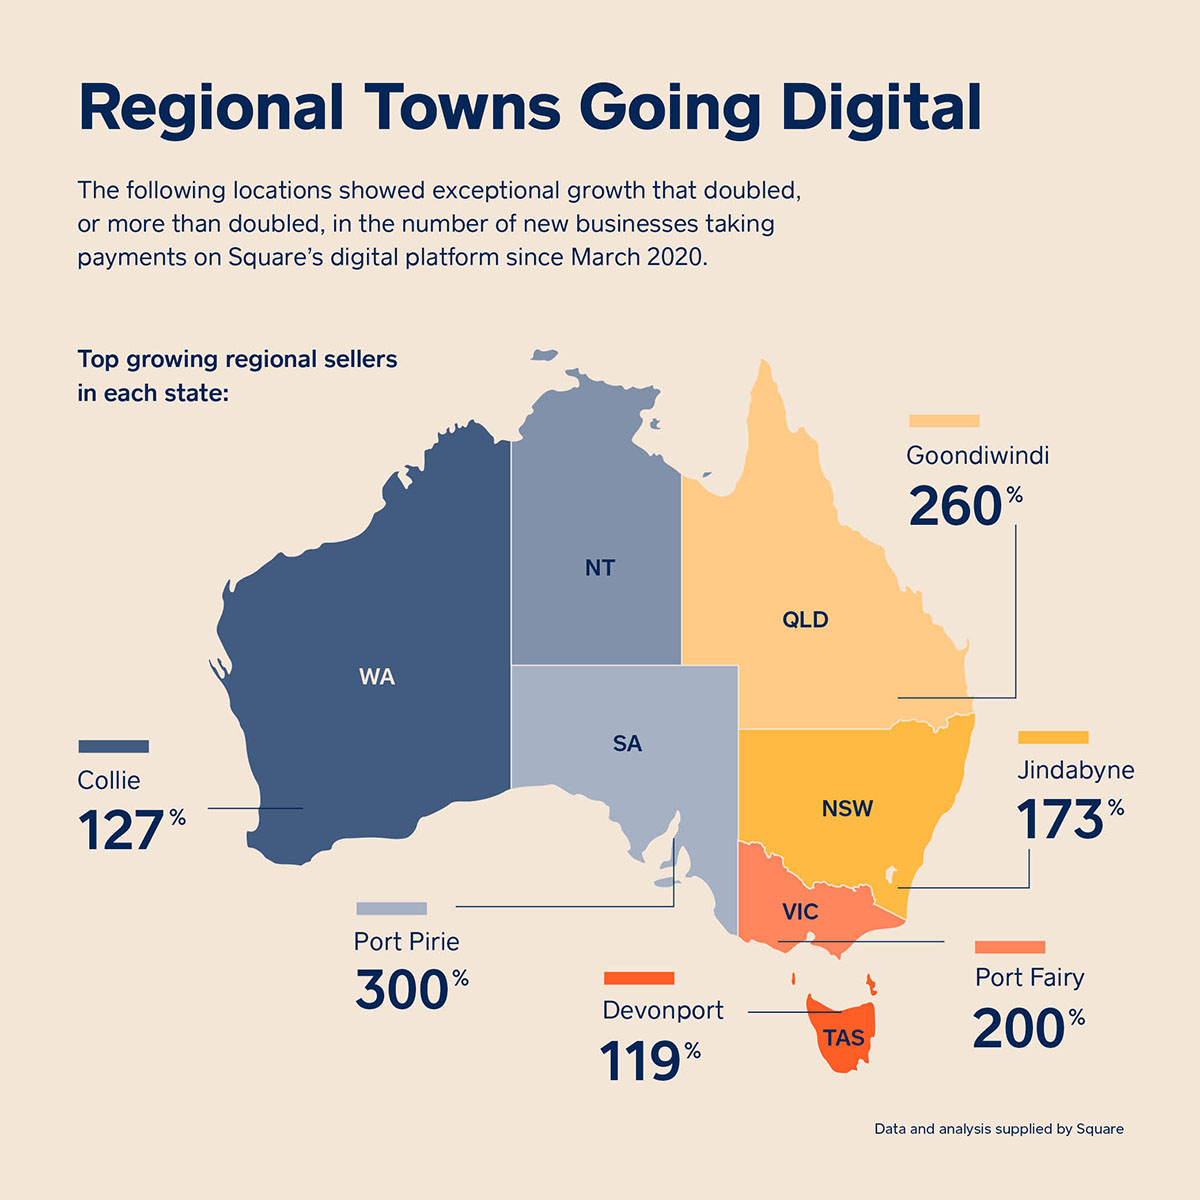 Regional Towns Going Digital